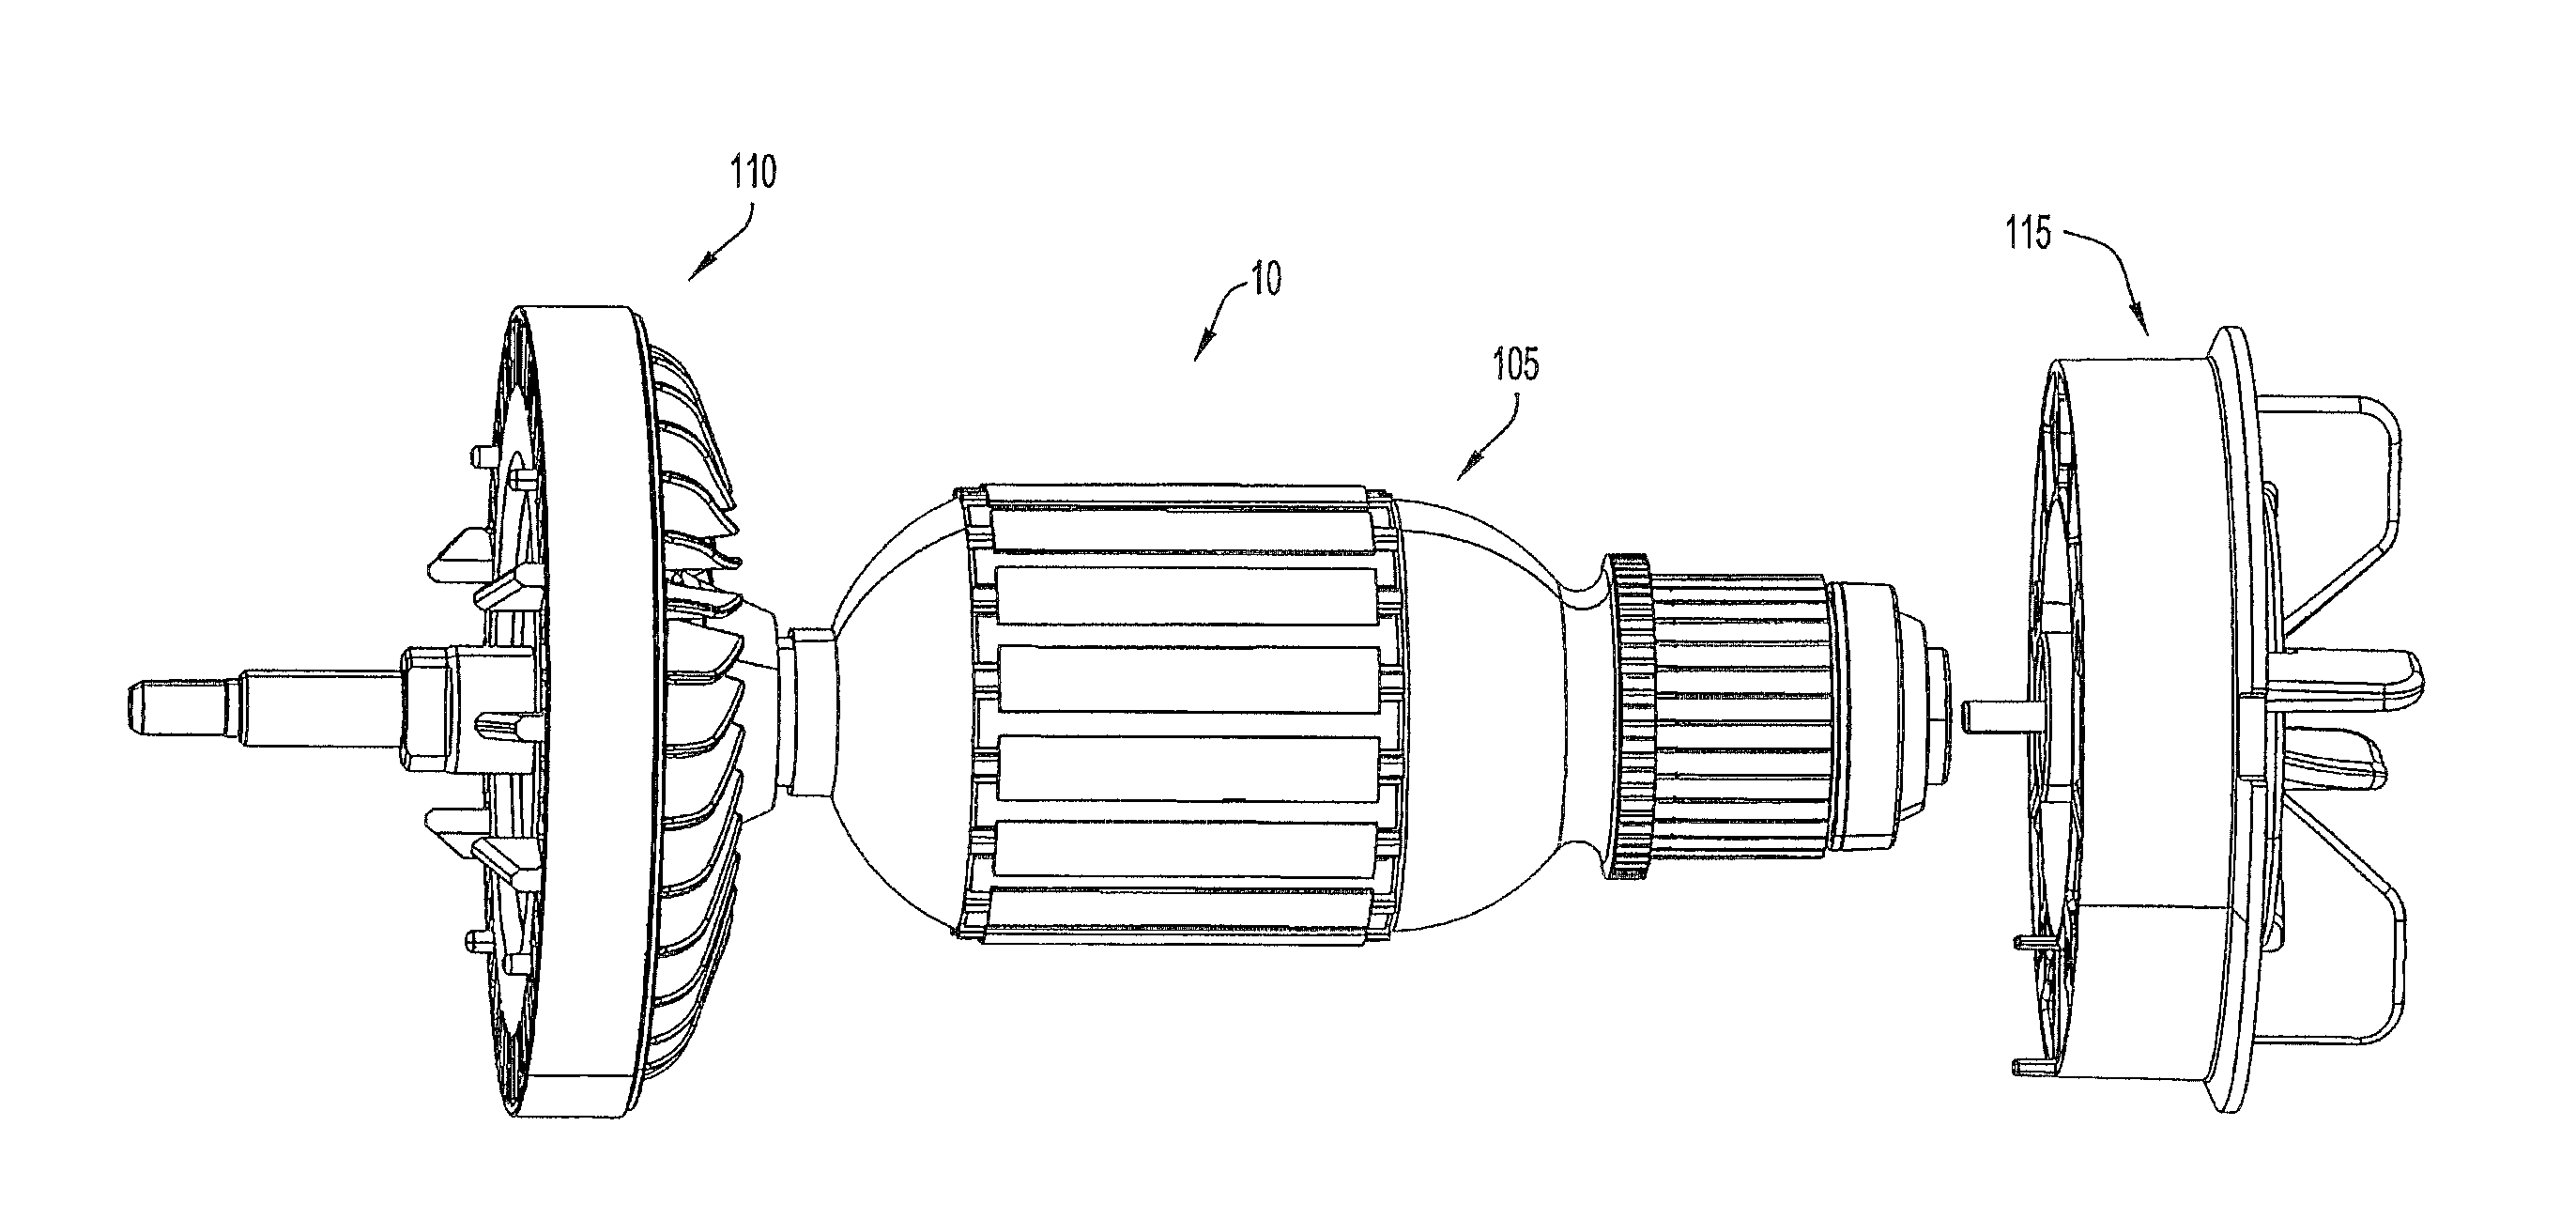 Airflow arrangement for a power tool